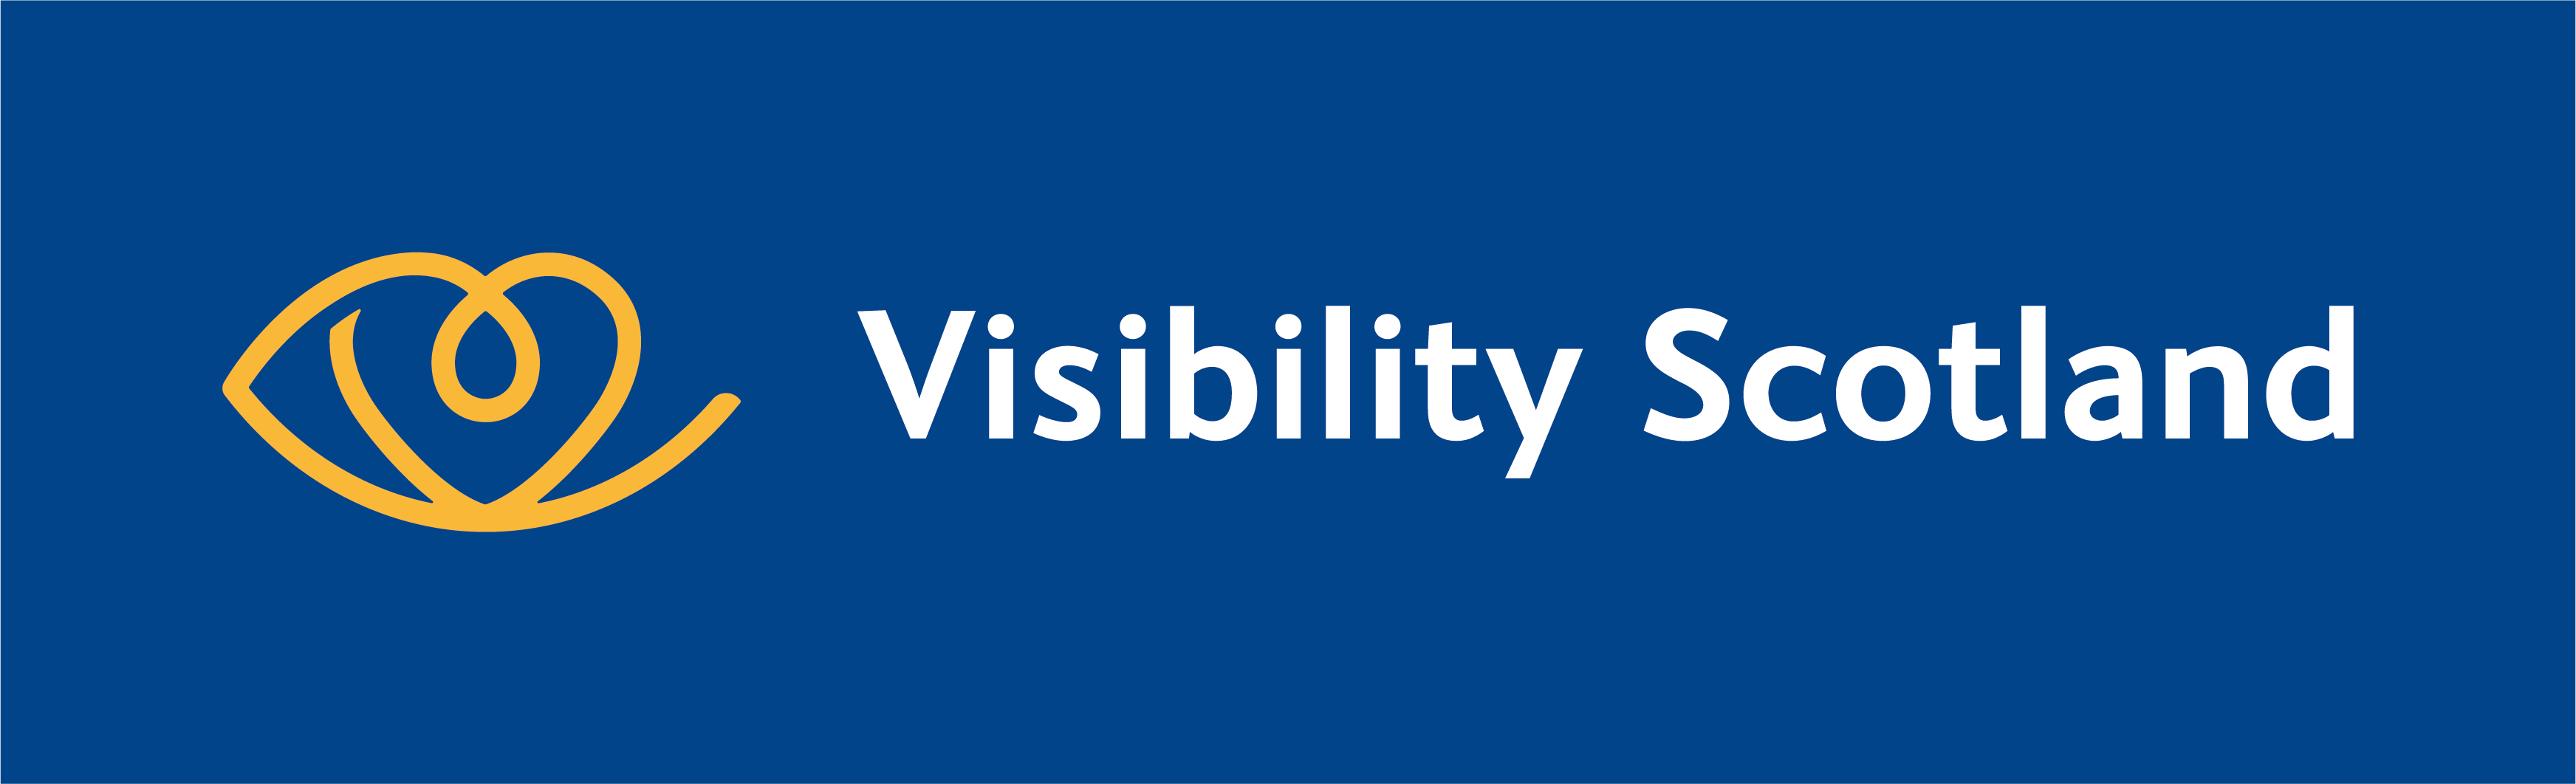 Visibility Scotland_logo - blue background